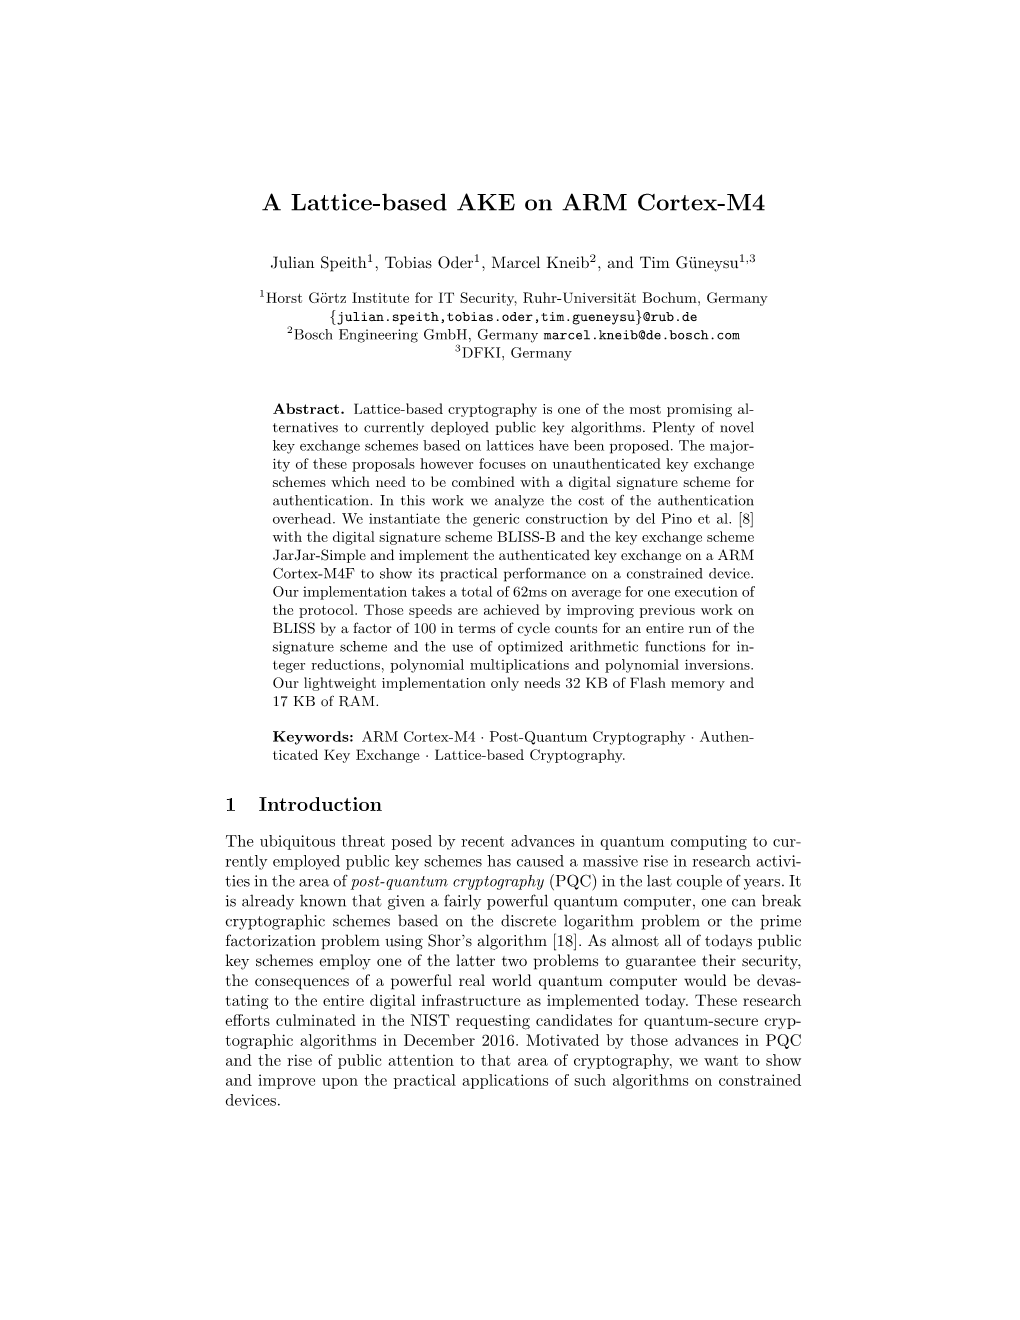 A Lattice-Based AKE on ARM Cortex-M4